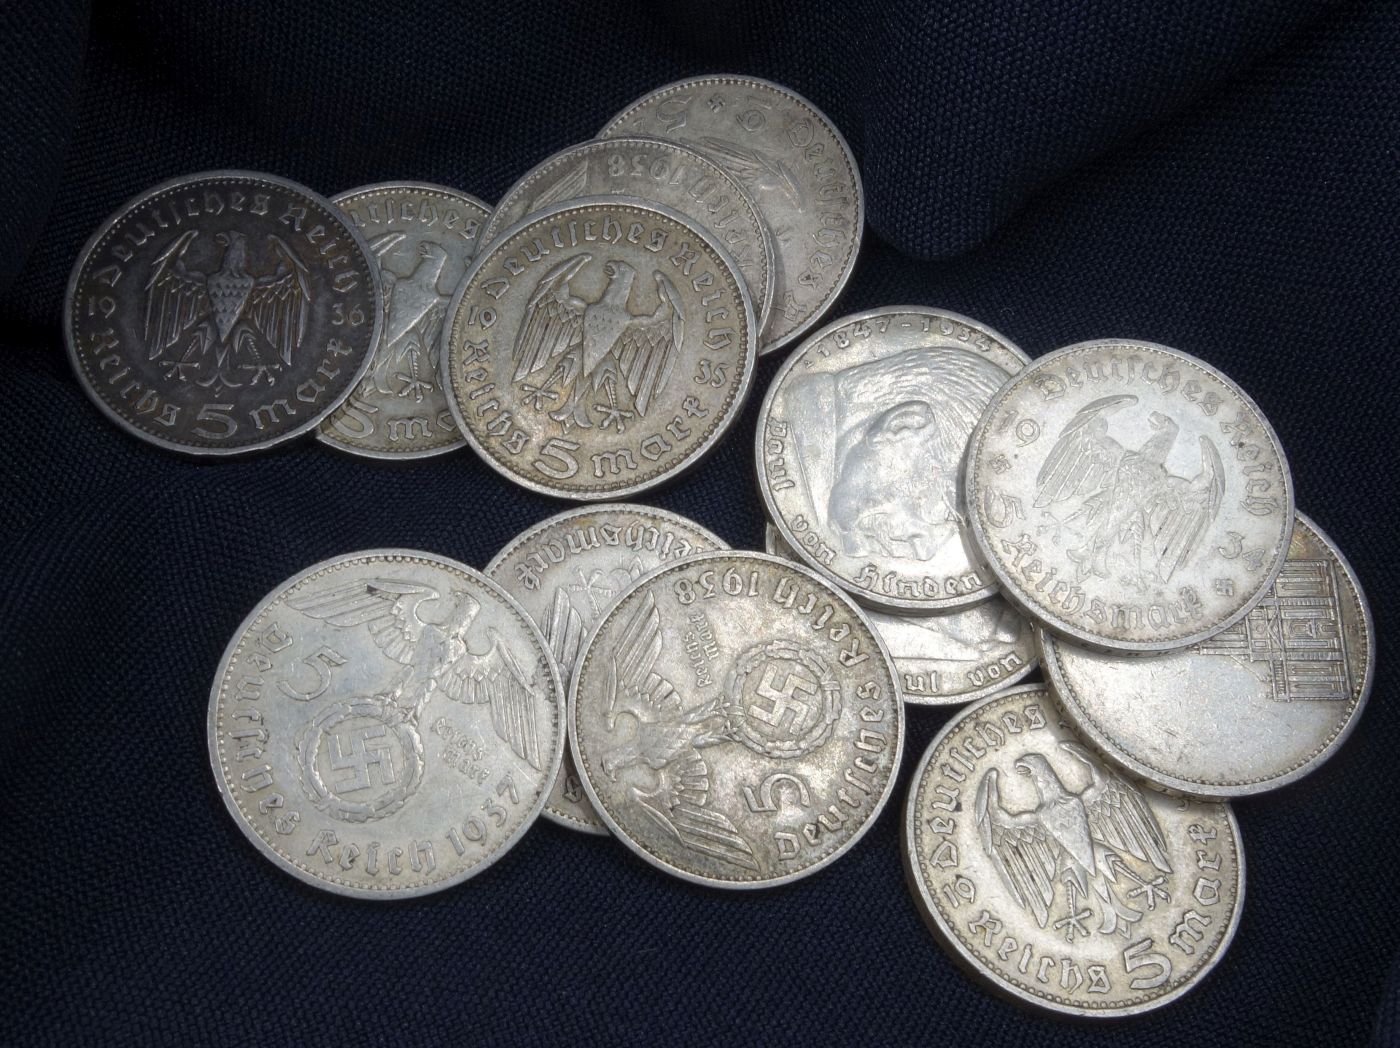 CONVOLUTE COINS: 5 Reichsmark